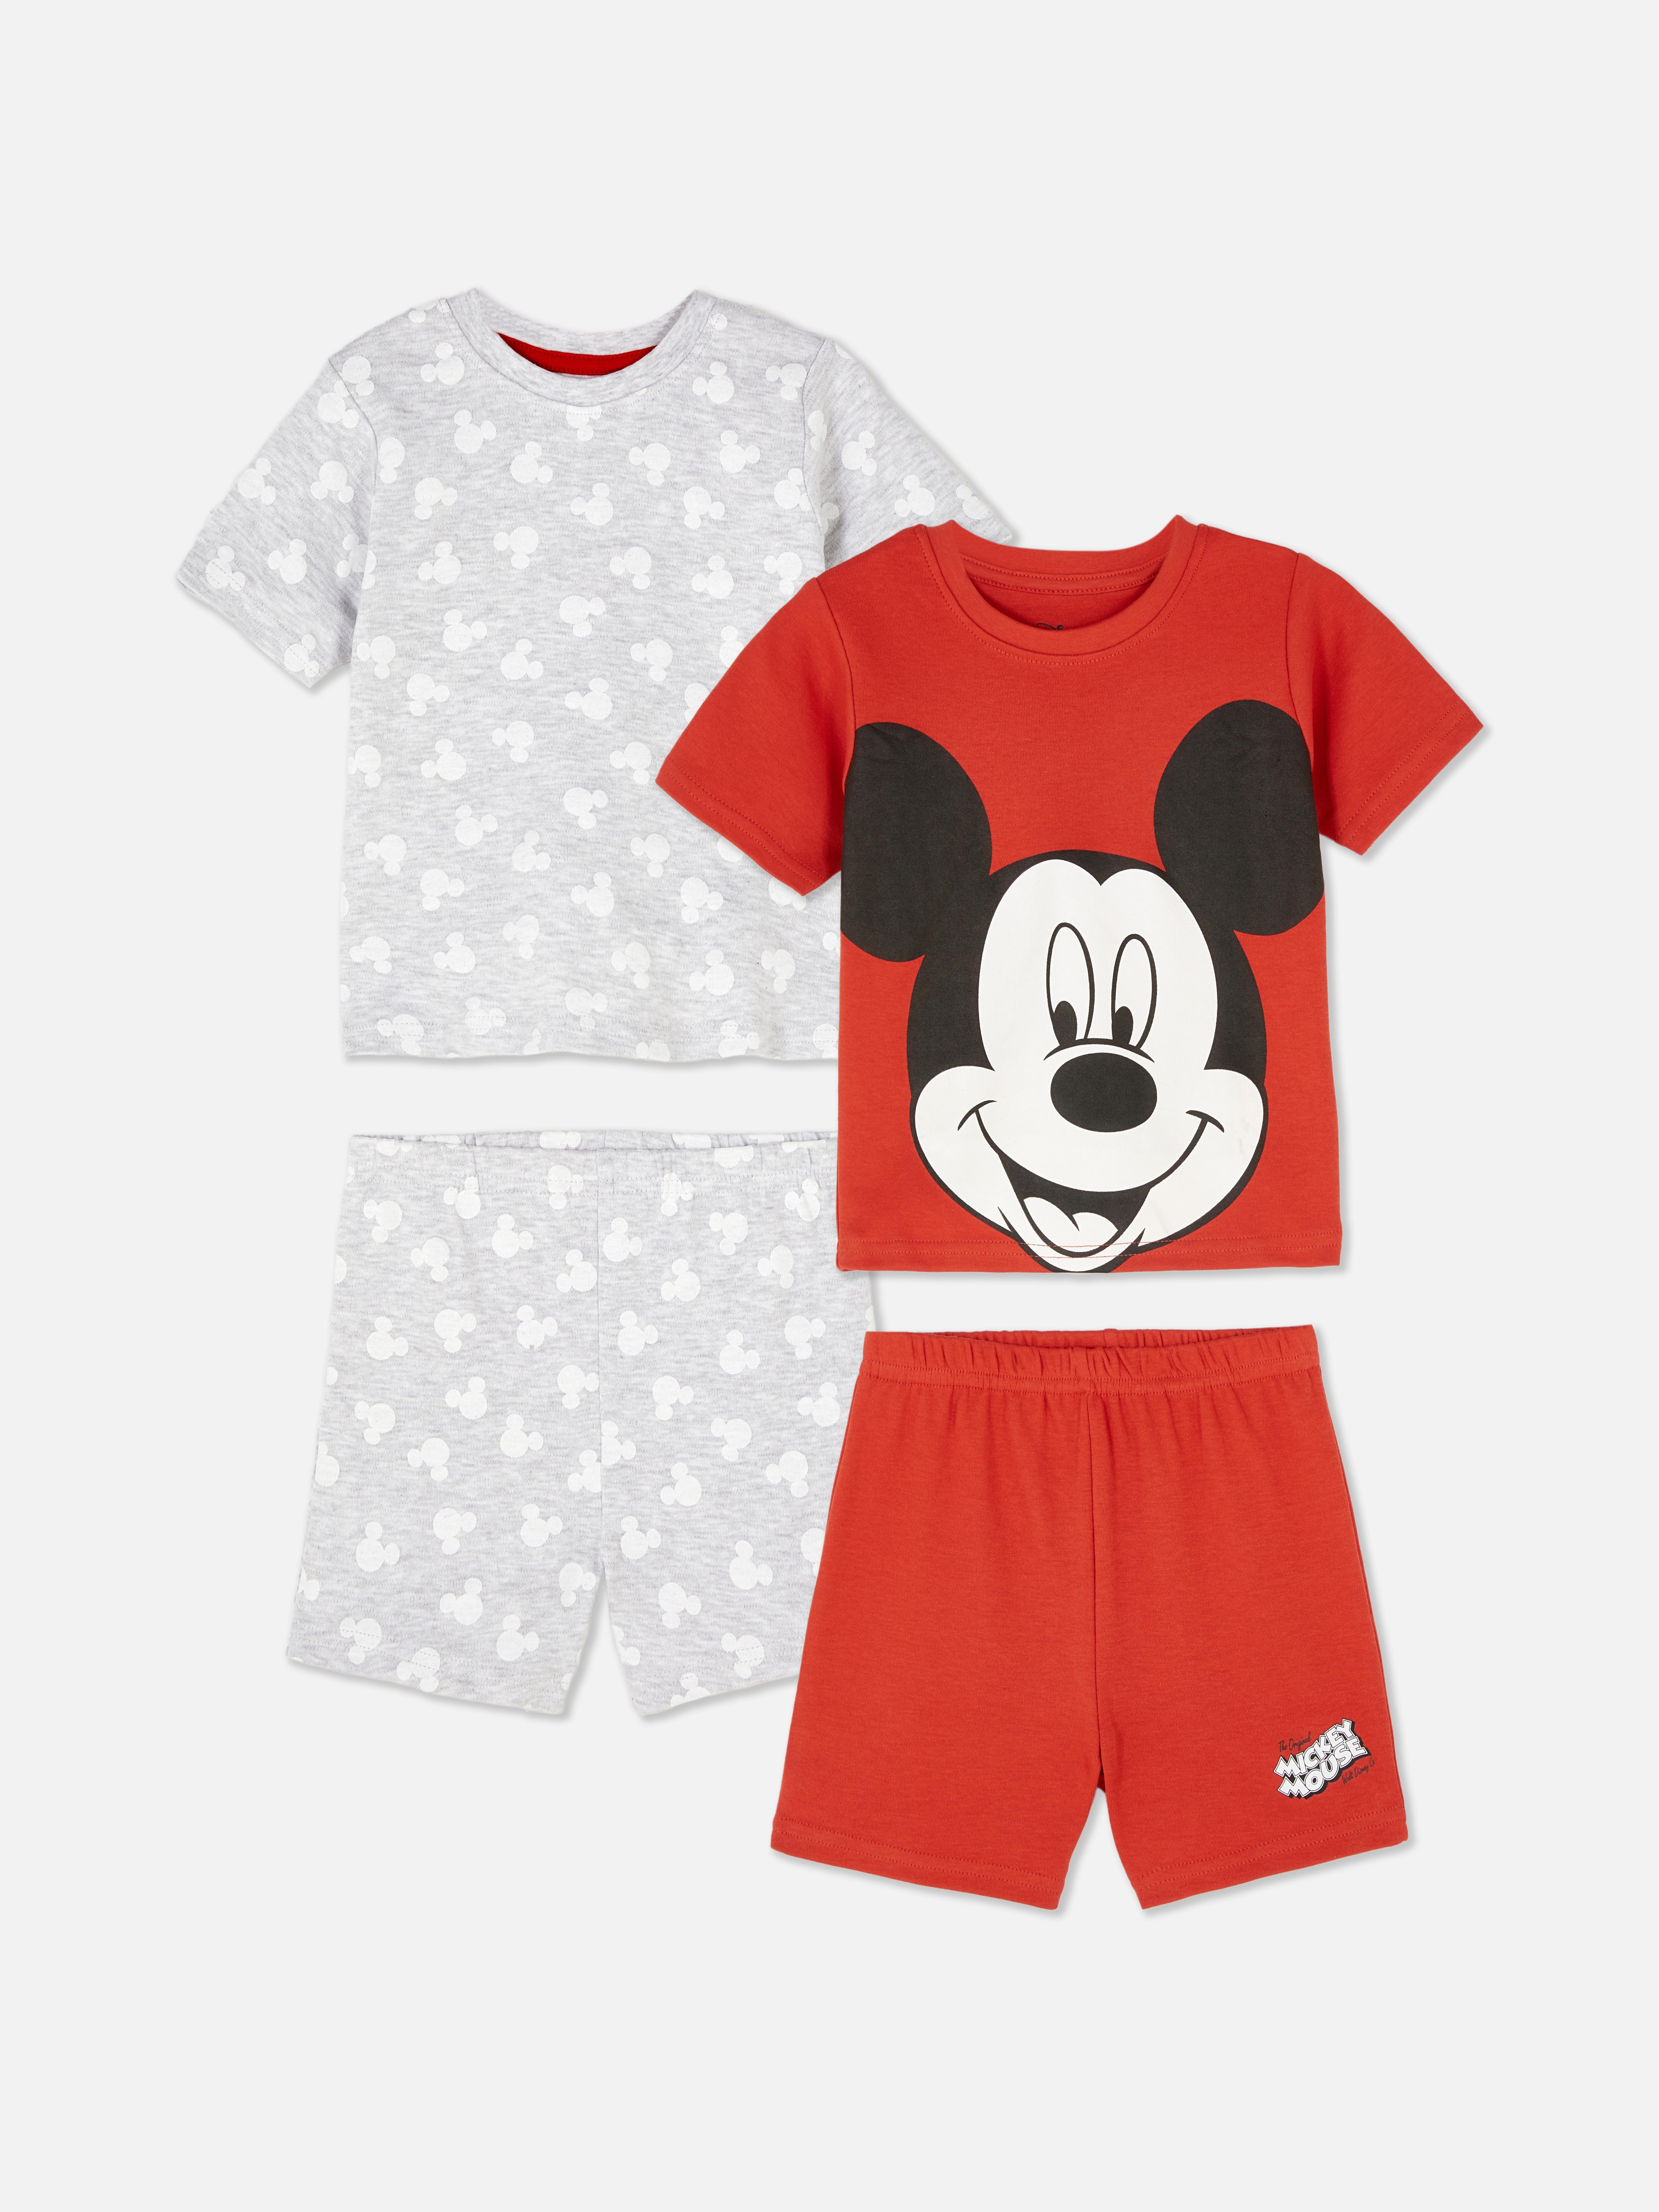 Pack de 2 pijamas de Mickey Mouse de Disney